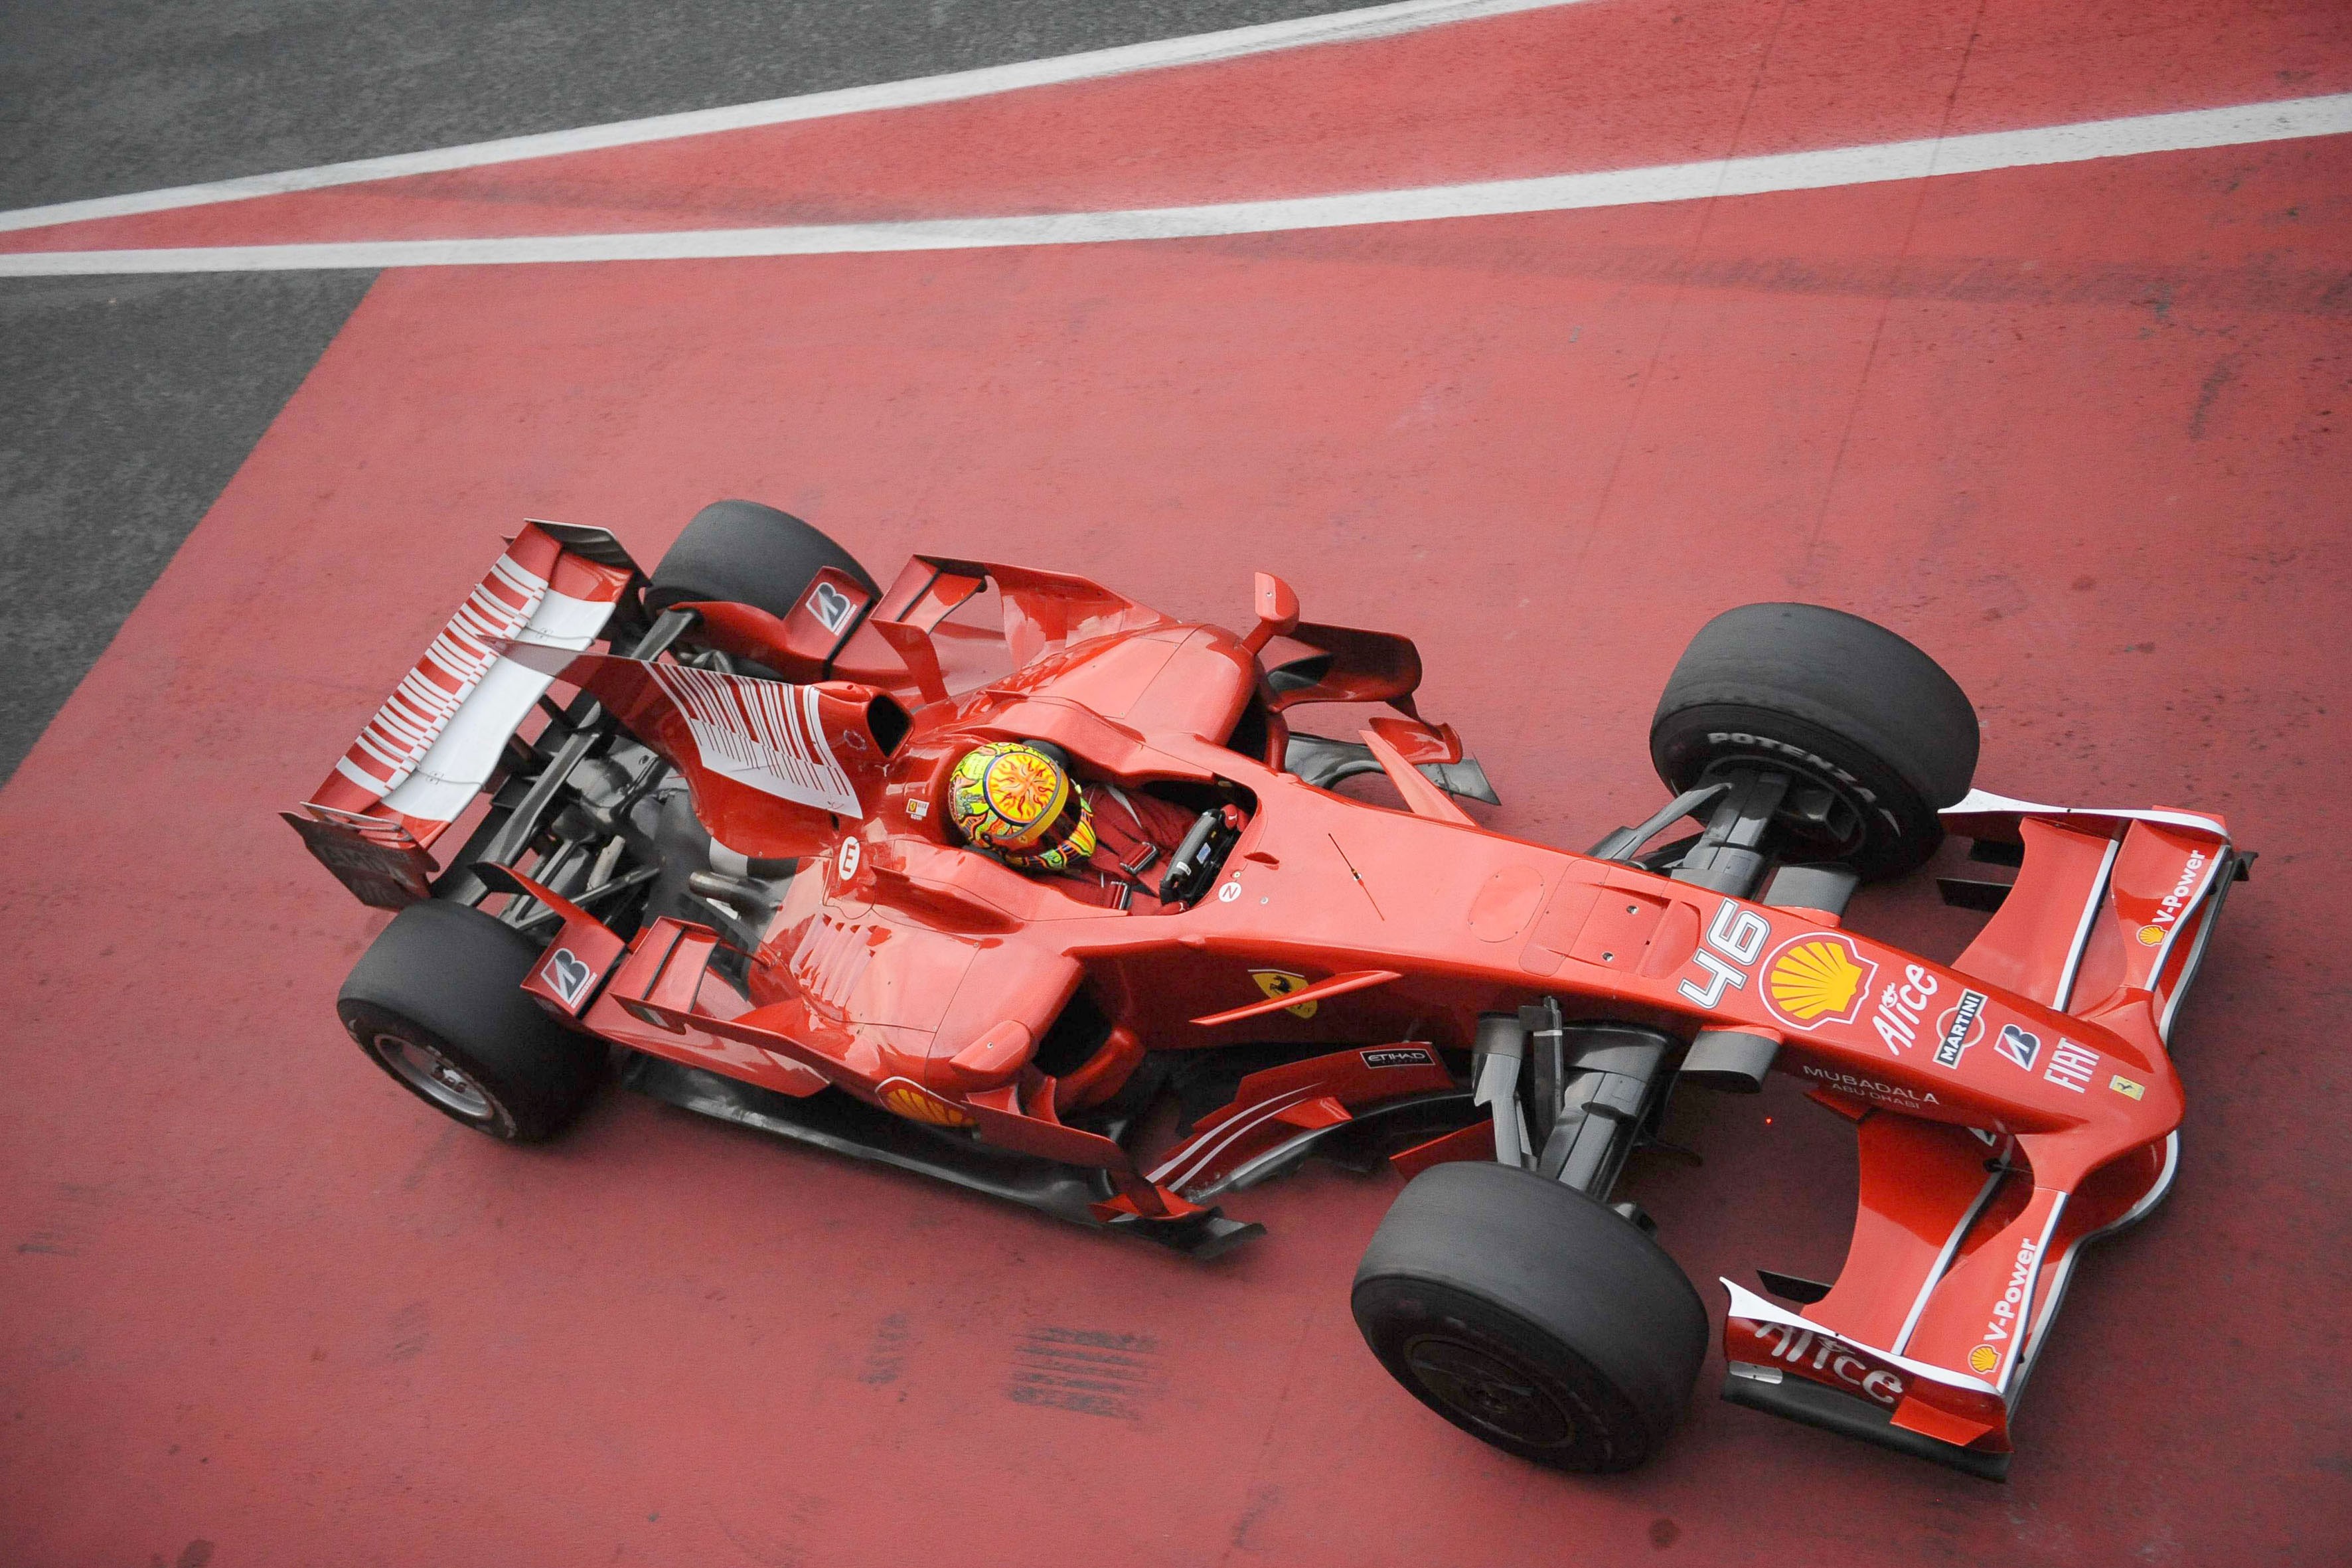 General 3543x2362 Shell racing Ferrari sport motorsport red cars car Scuderia Ferrari formula cars